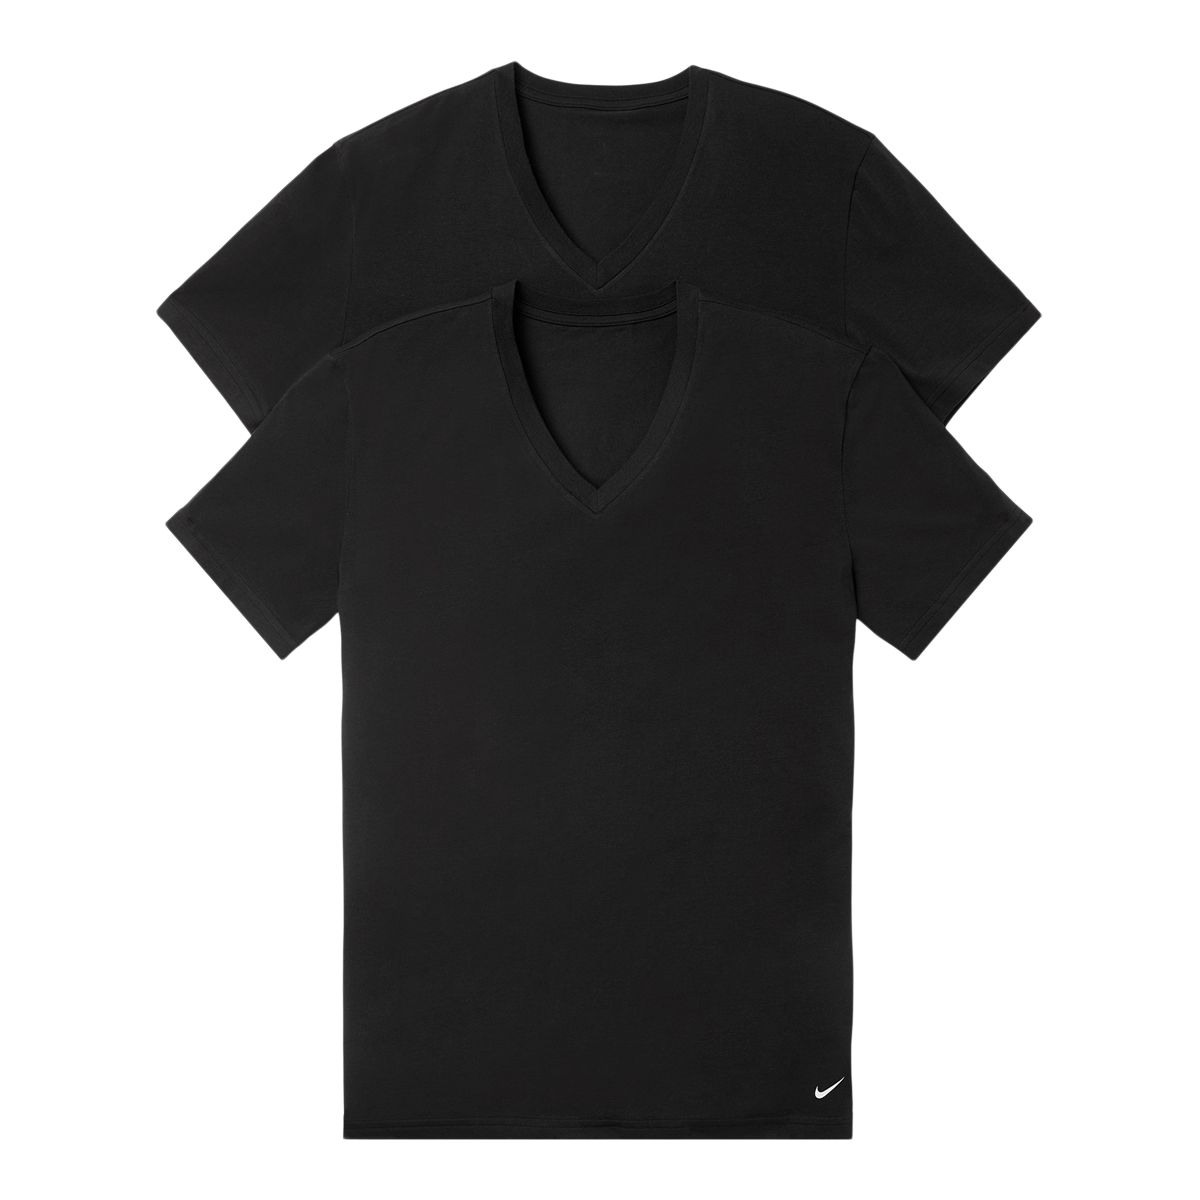 Nike Men's Essential V-Neck Undershirt - 2 Pack